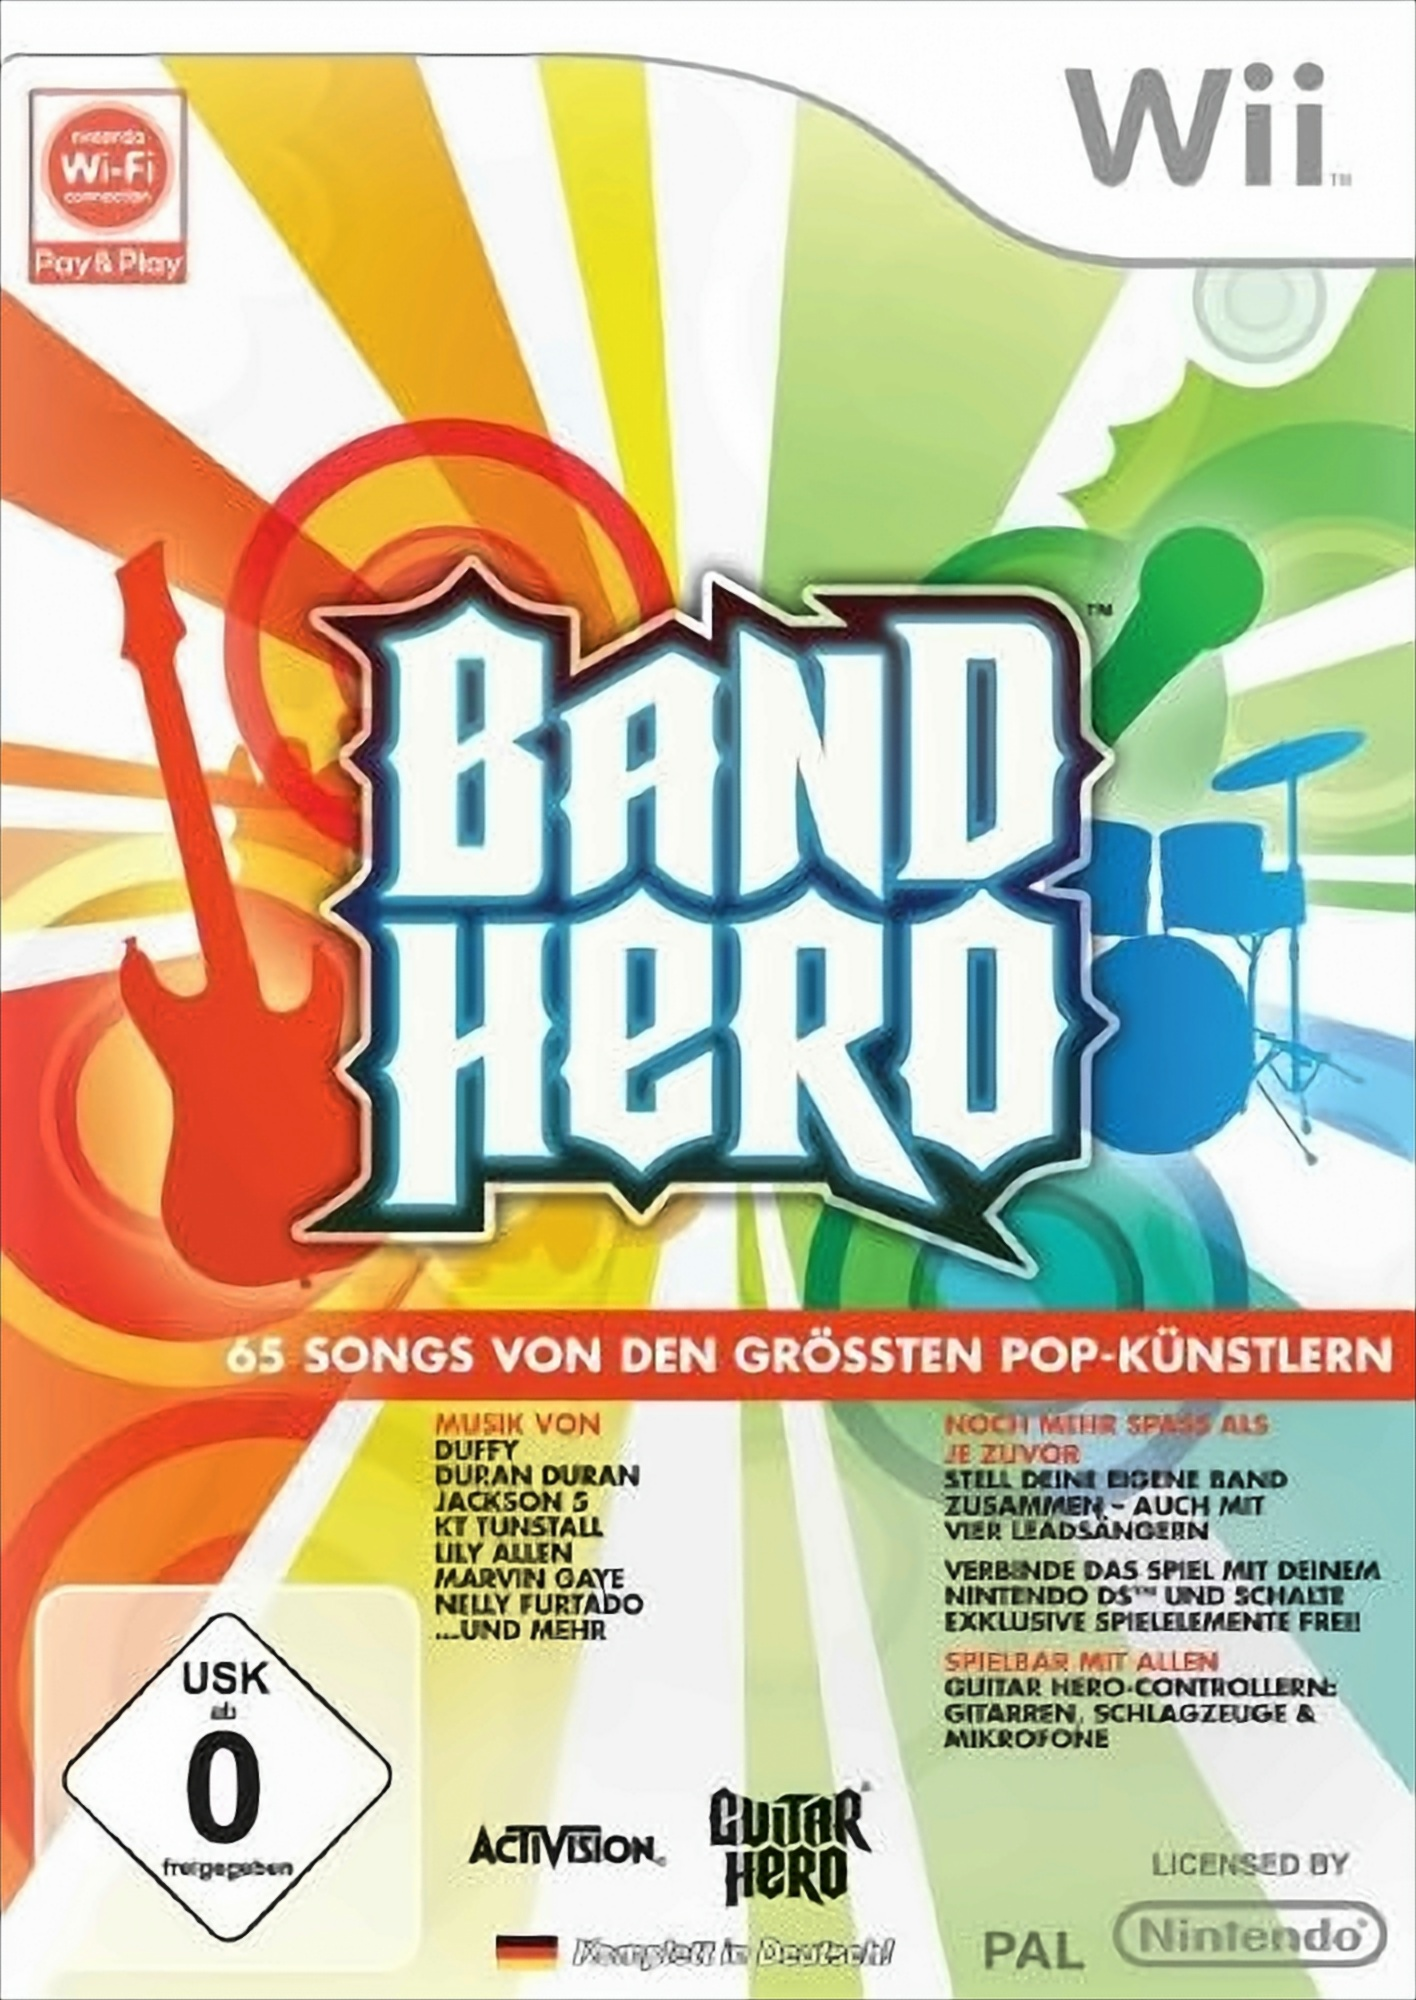 Band Software Wii] - - Hero [Nintendo